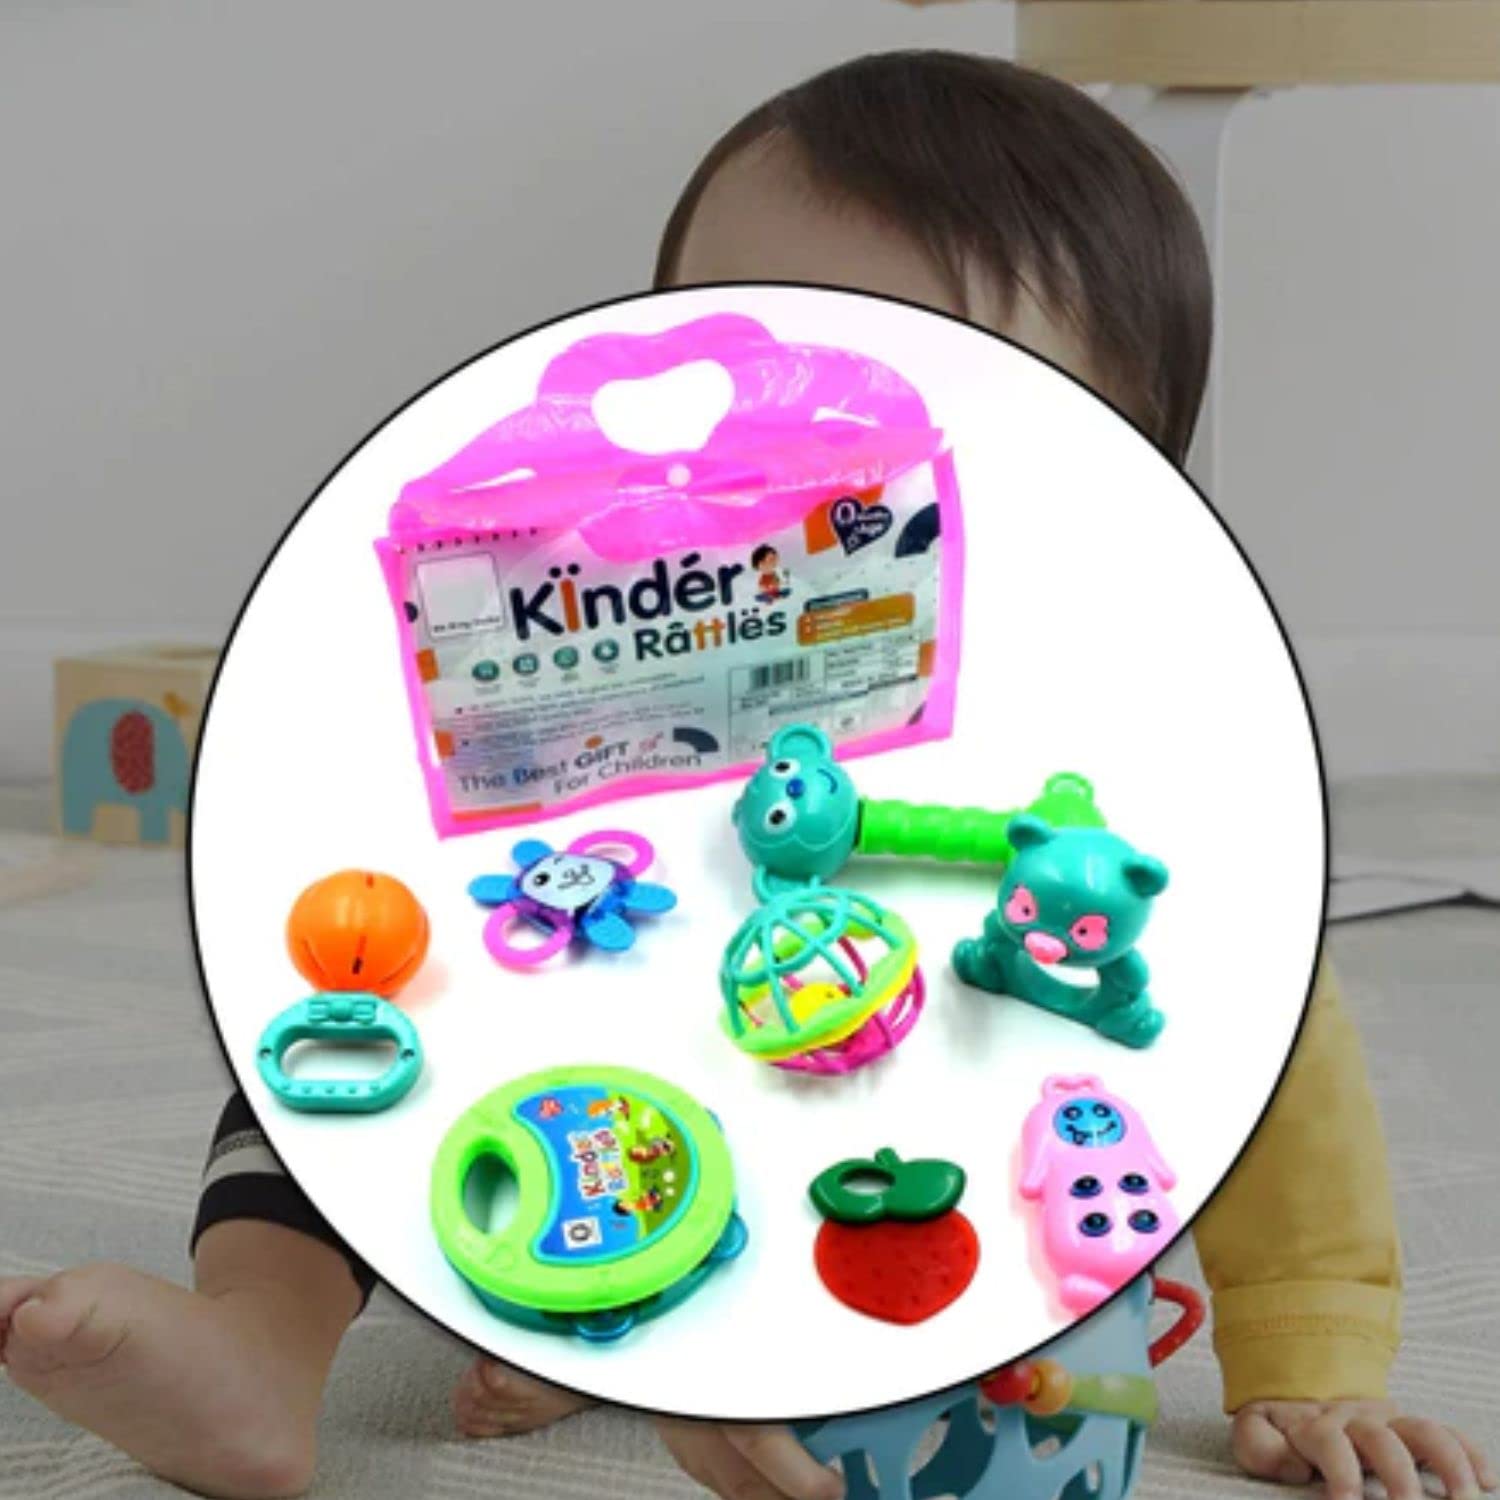 Kids Mandi non-toxic plastic baby rattle teether toys set.